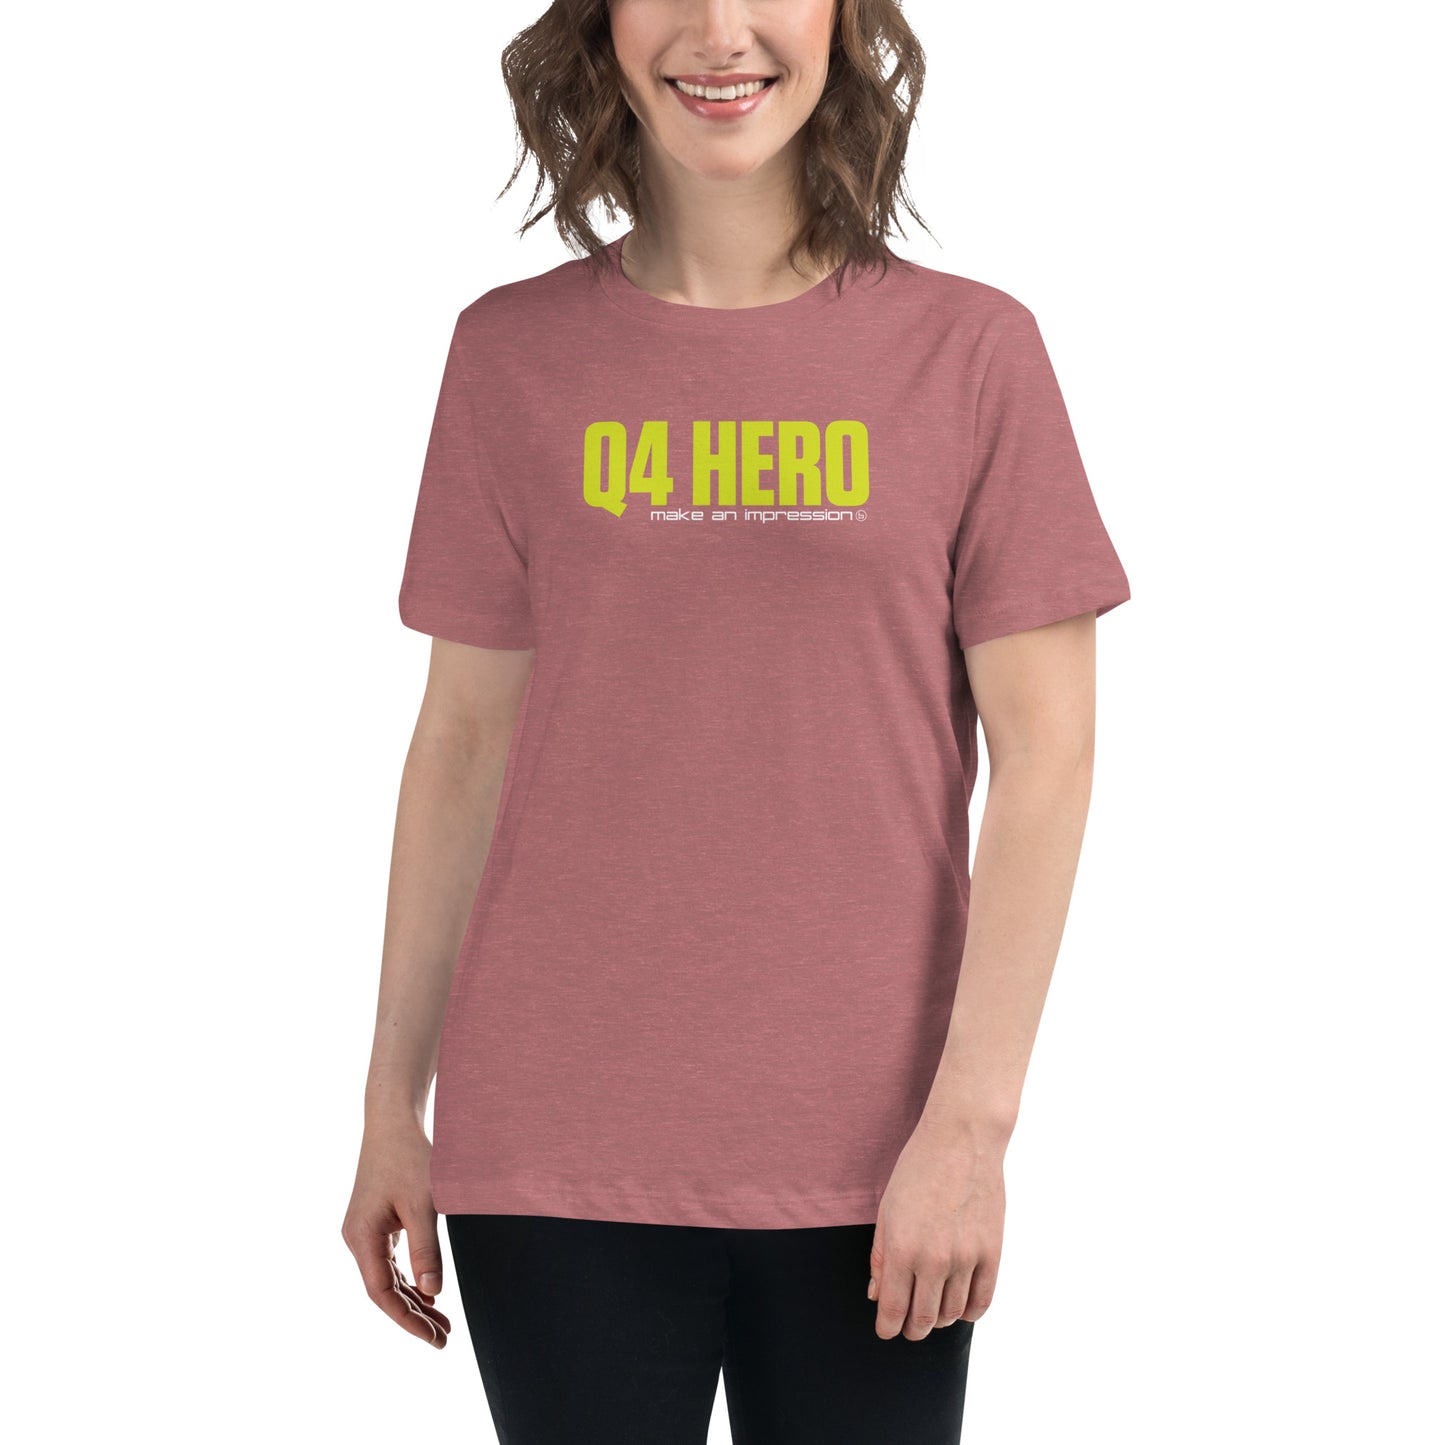 Q4 HERO T-Shirt - Women's Relaxed Cut - Safety Yellow